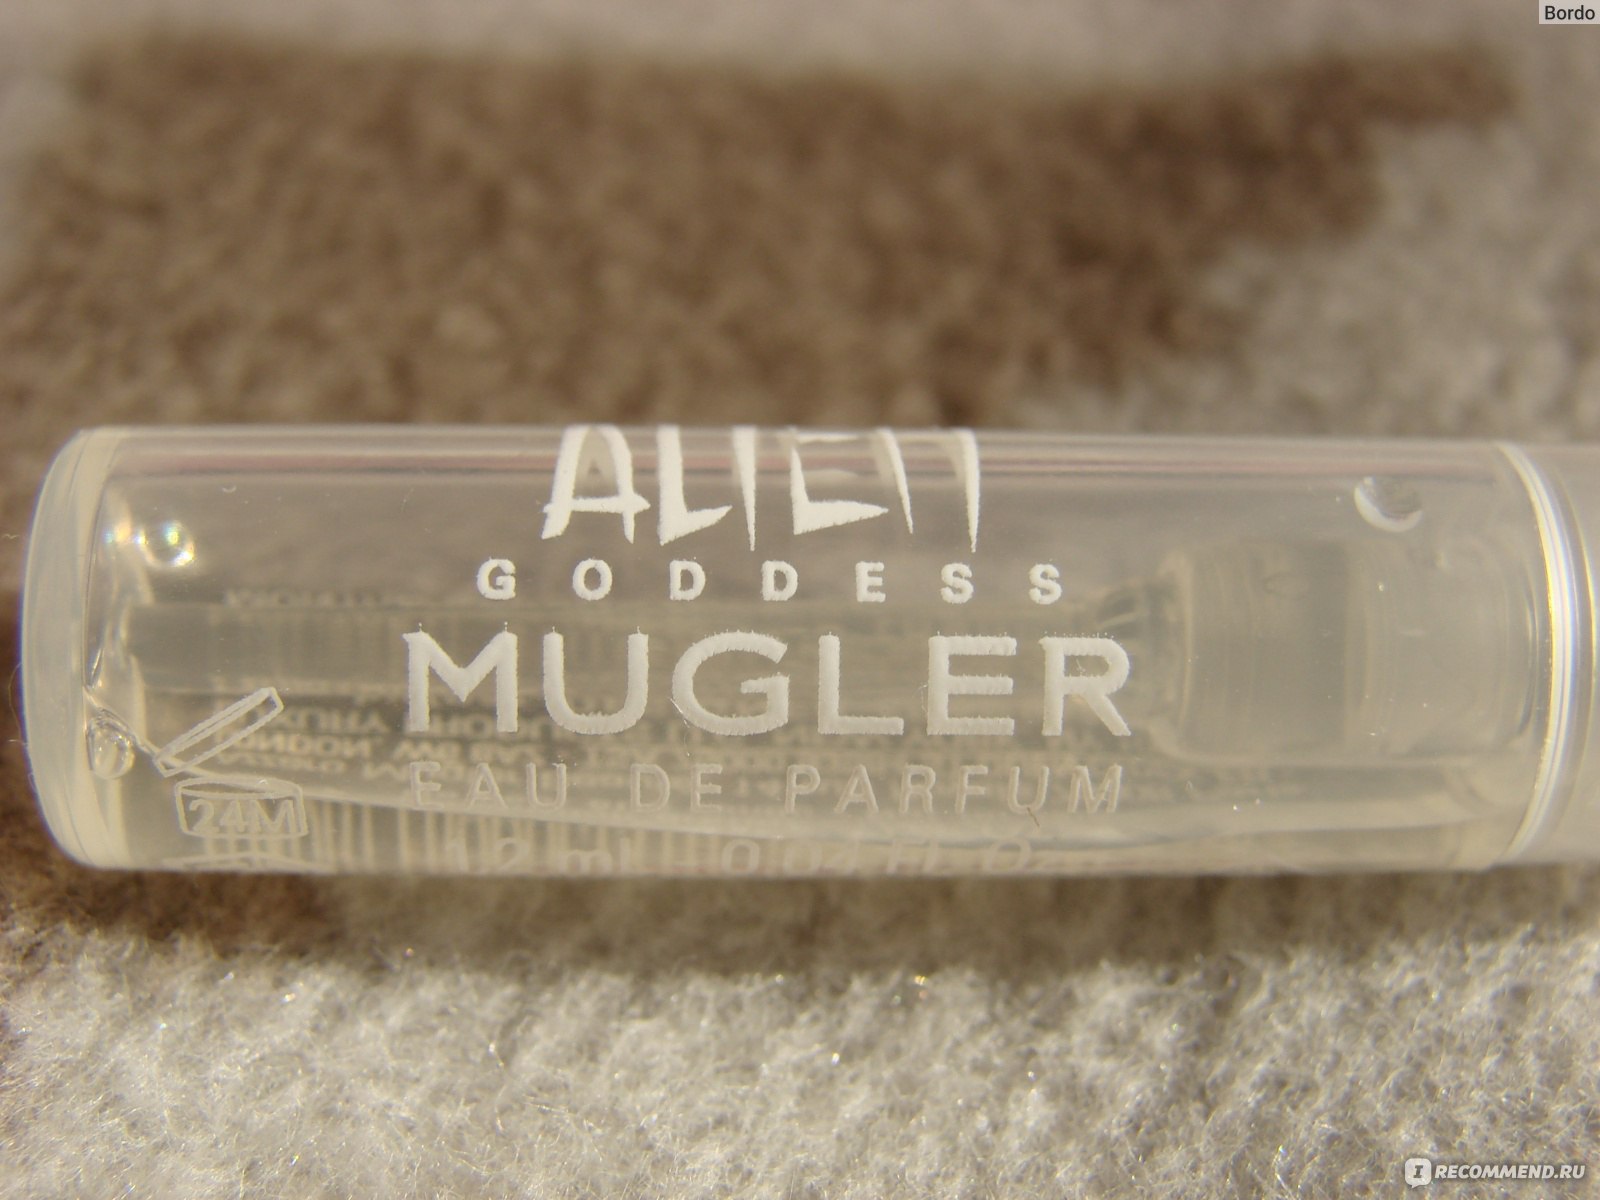 Парфюмерная вода Mugler Alien Goddess: название аромата на атомайзере-пробнике